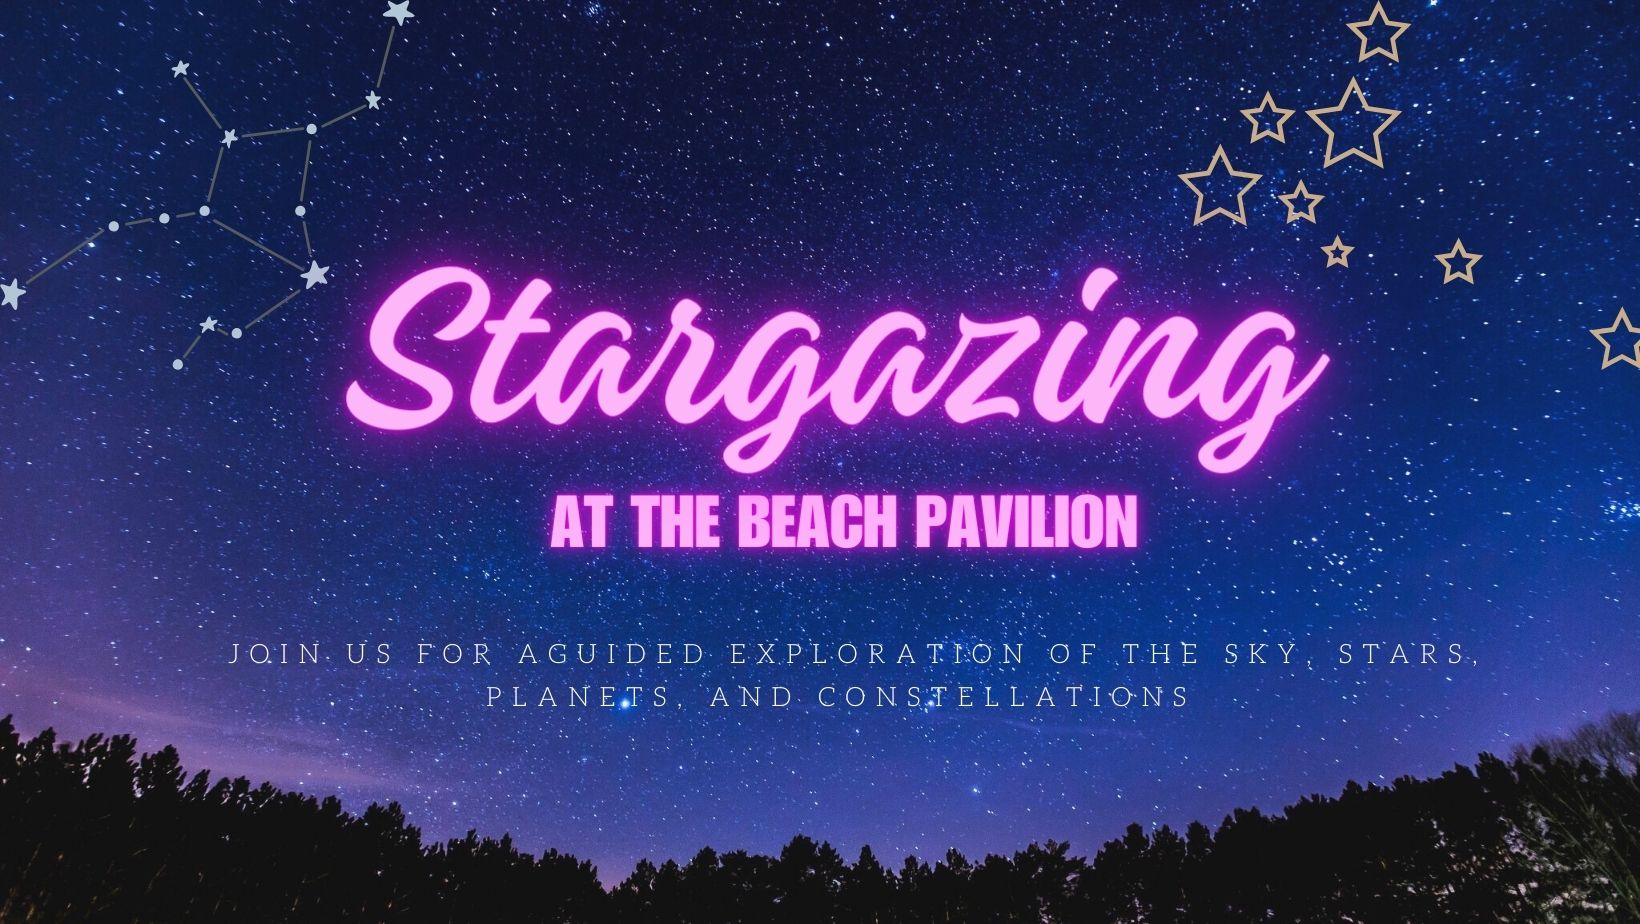 Stargazing at the beach pavilion